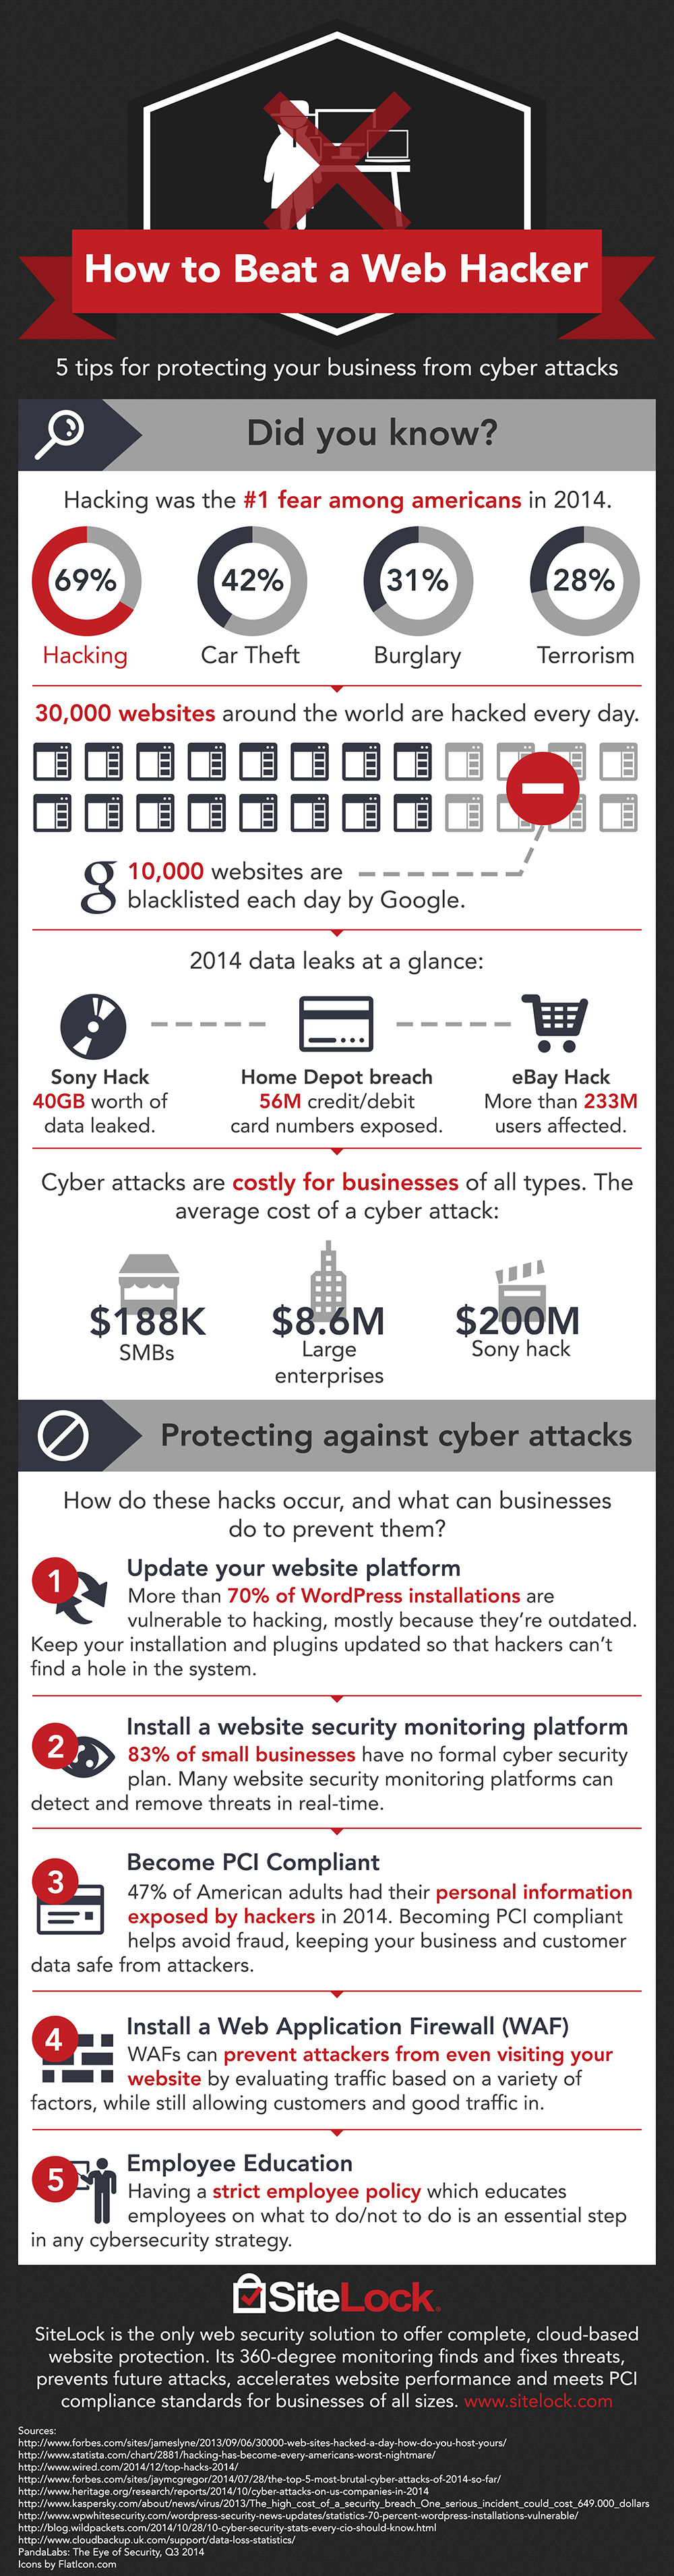 SiteLock-HowToBeatAWebHacker-Infographic-v6_s